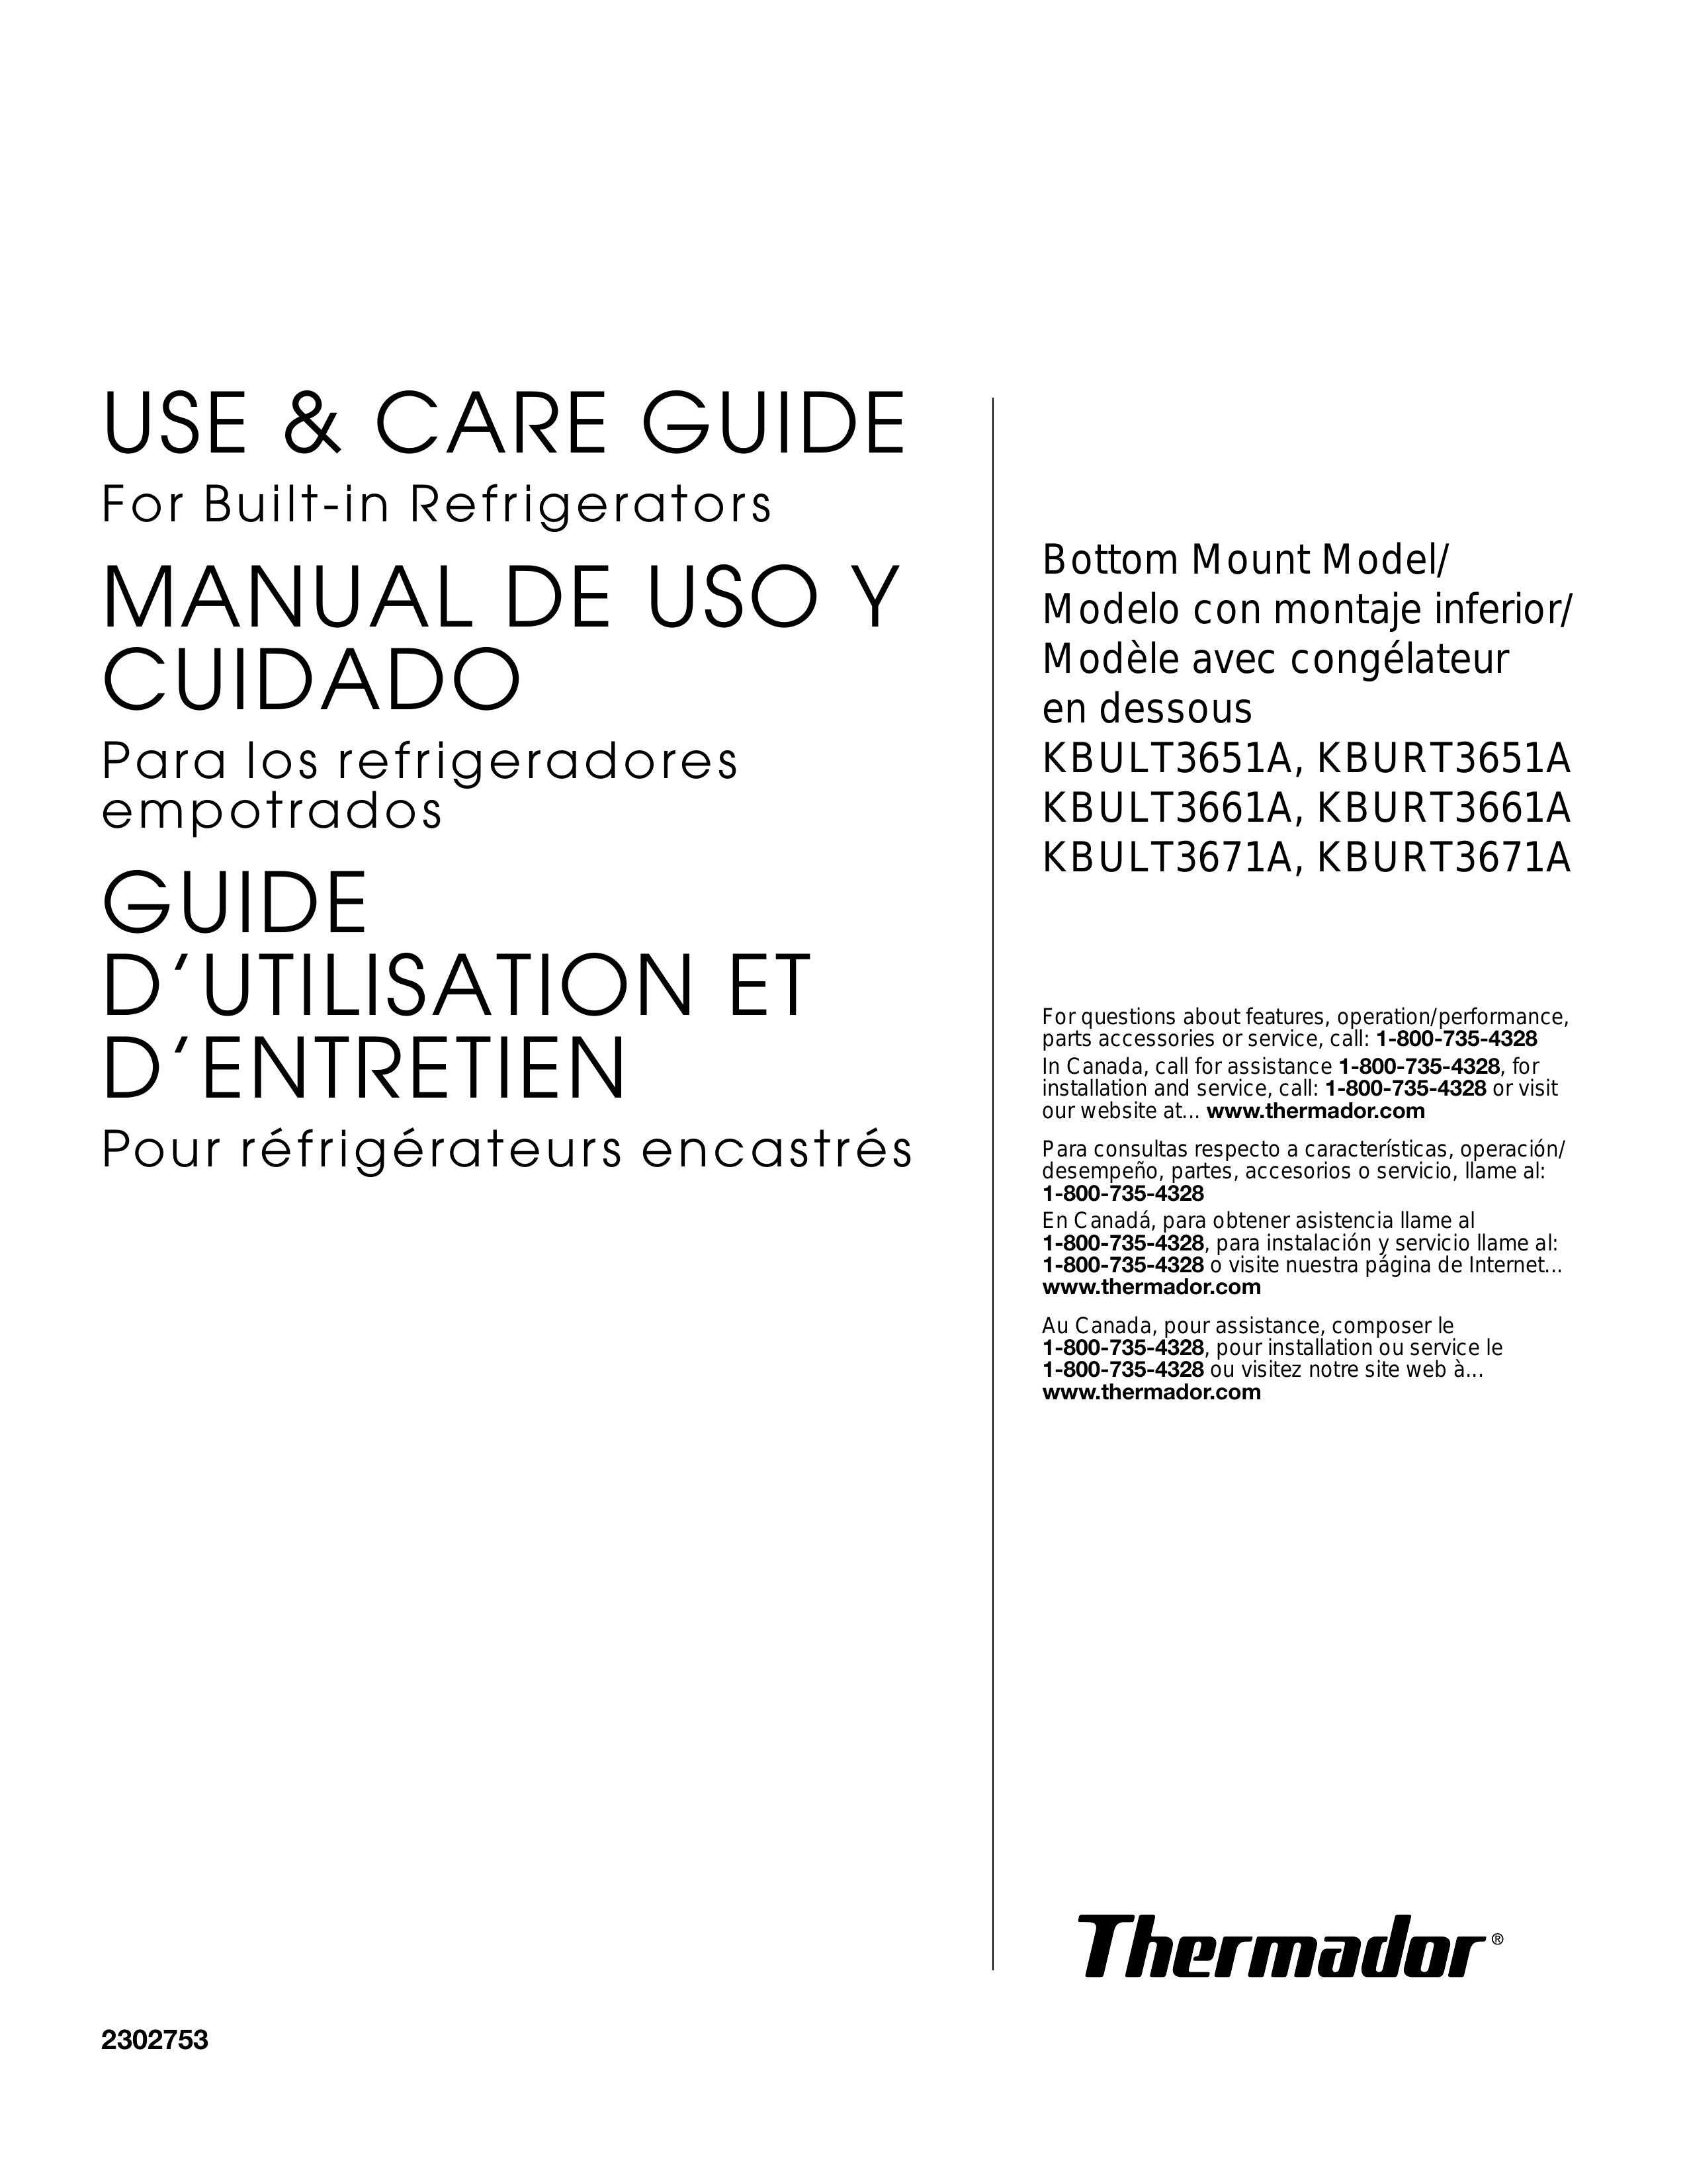 Thermador KBURT3671A Refrigerator User Manual